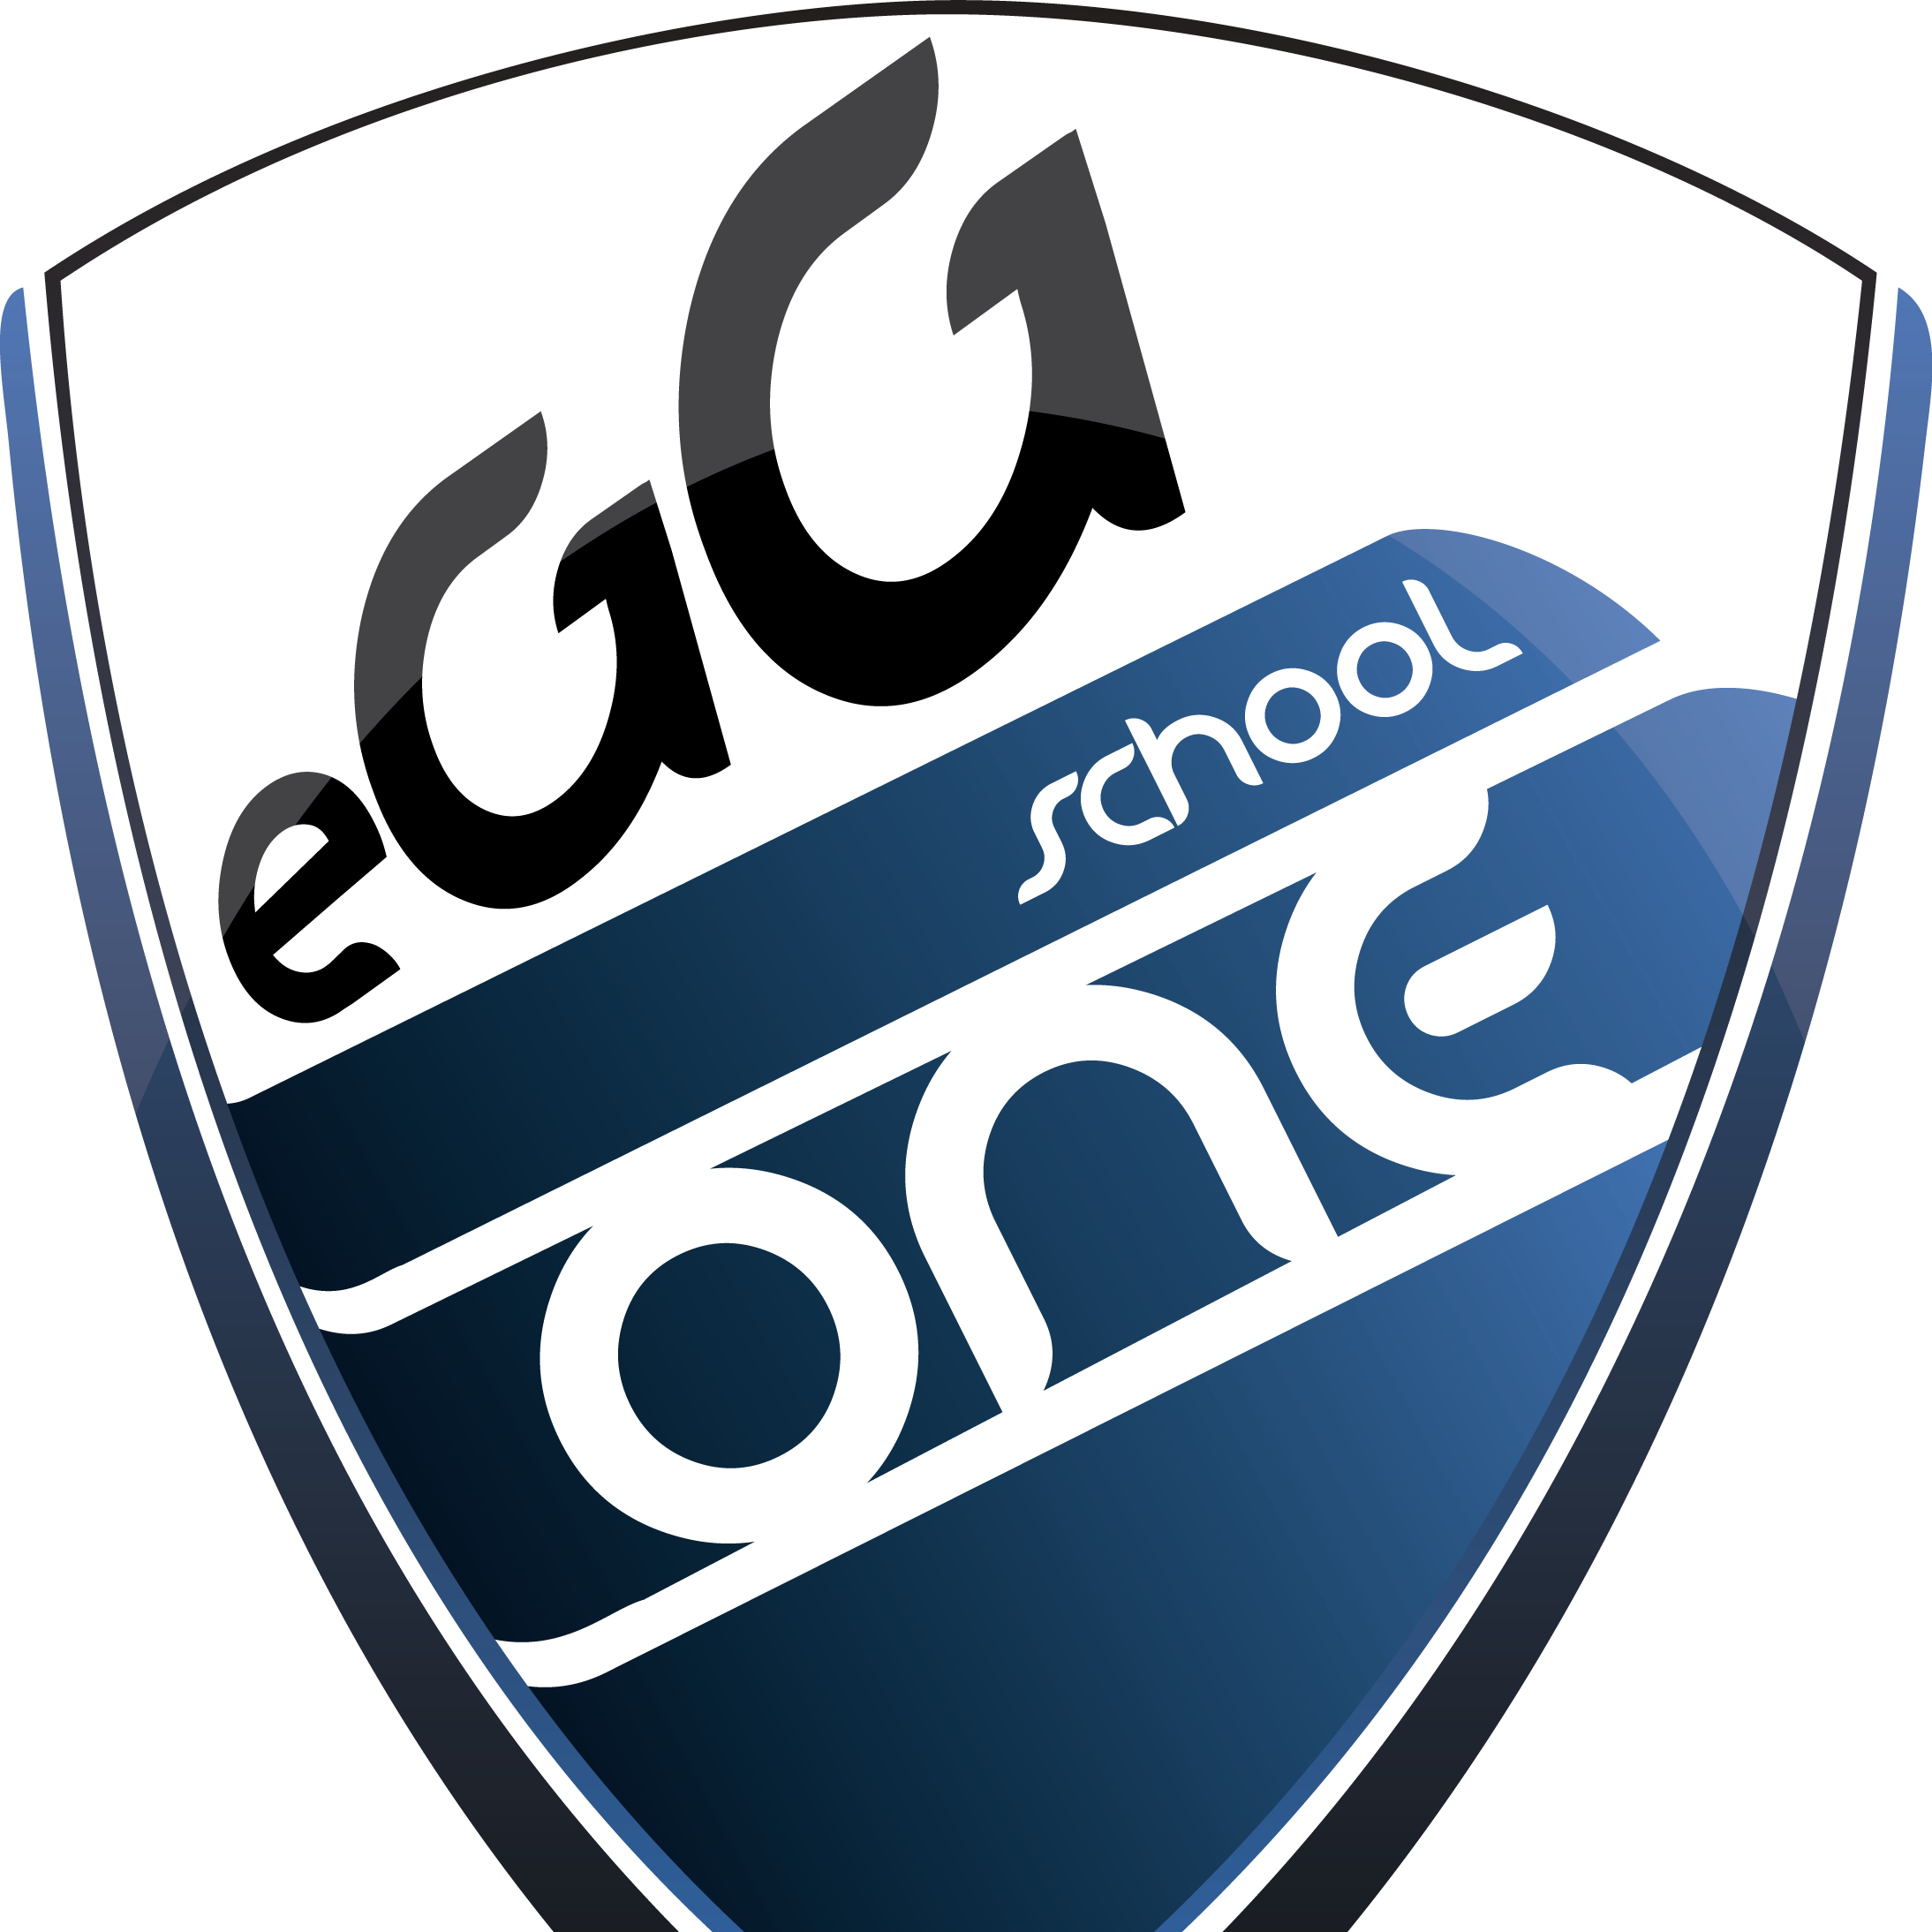 eGG-one school